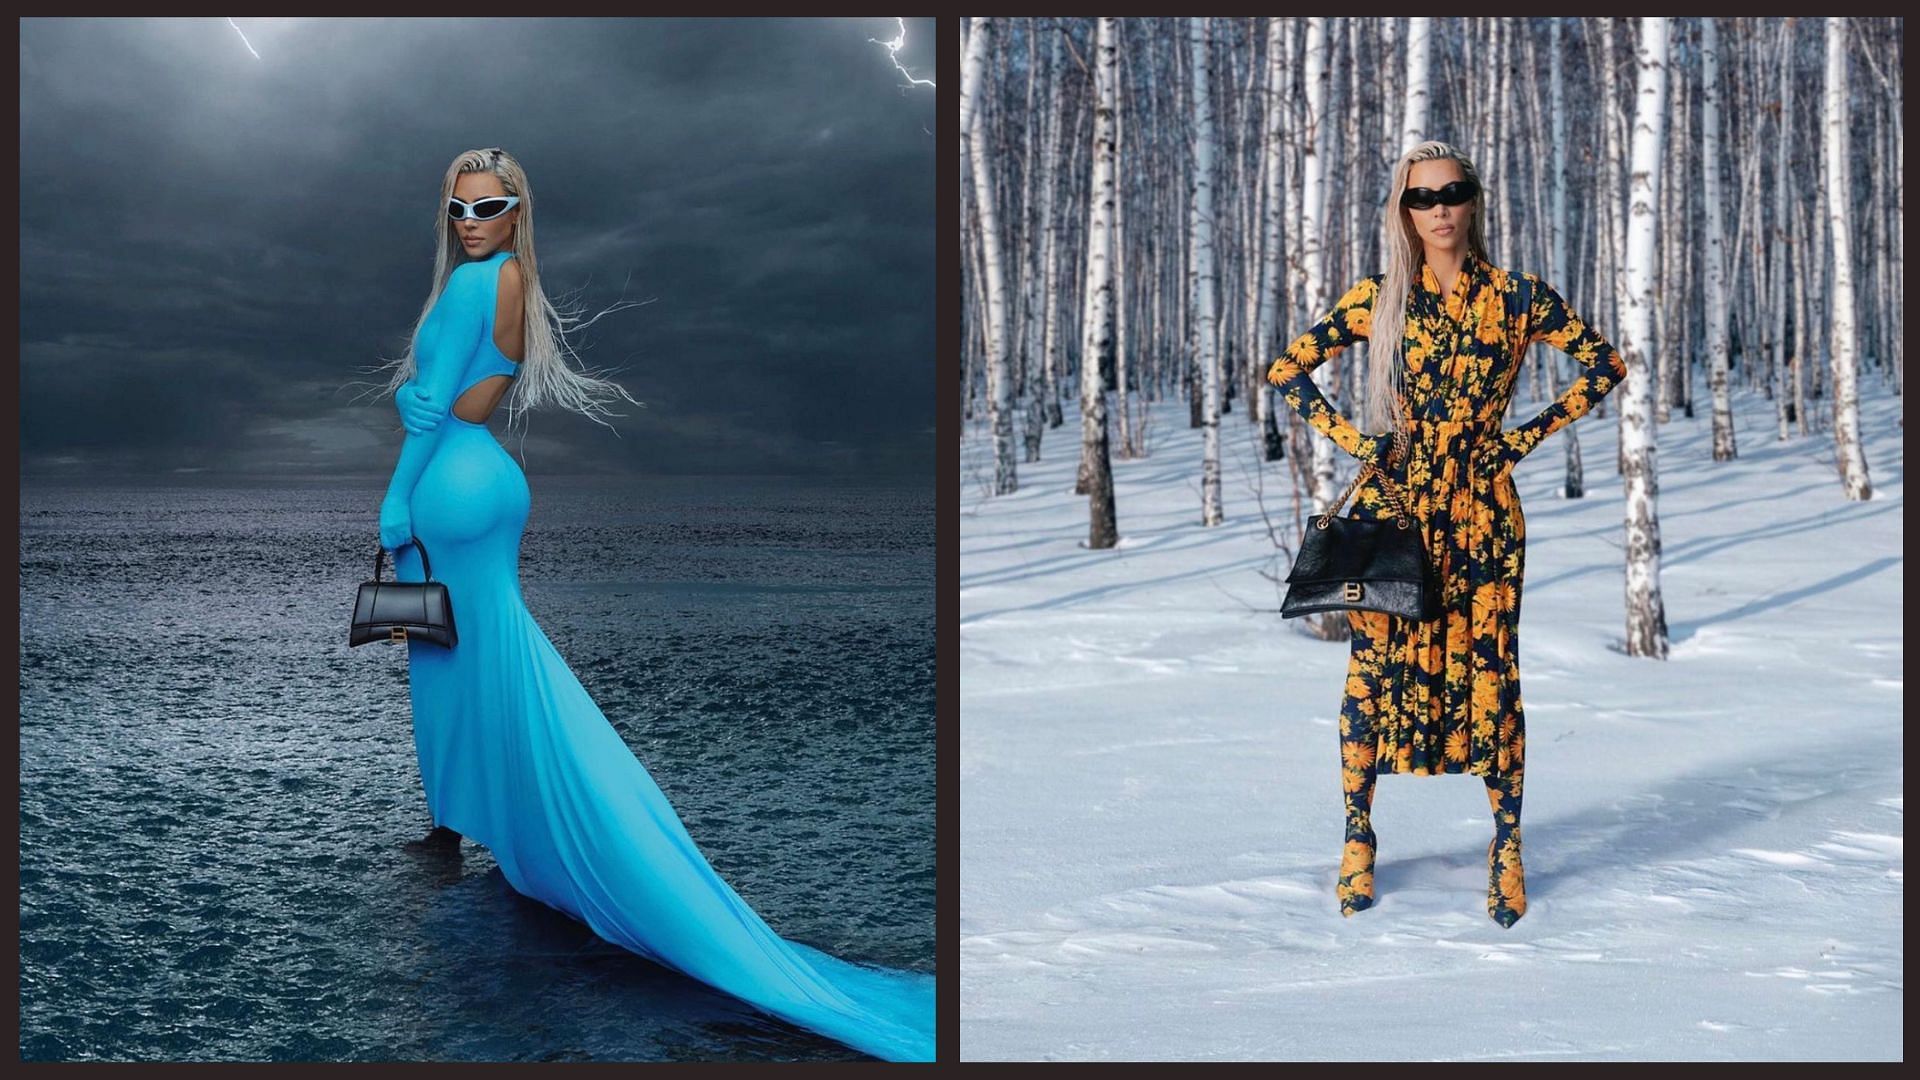 Kim Kardashian impressed the internet with her looks for Balenciaga Winter 2022 campaign (Image via Balenciaga)